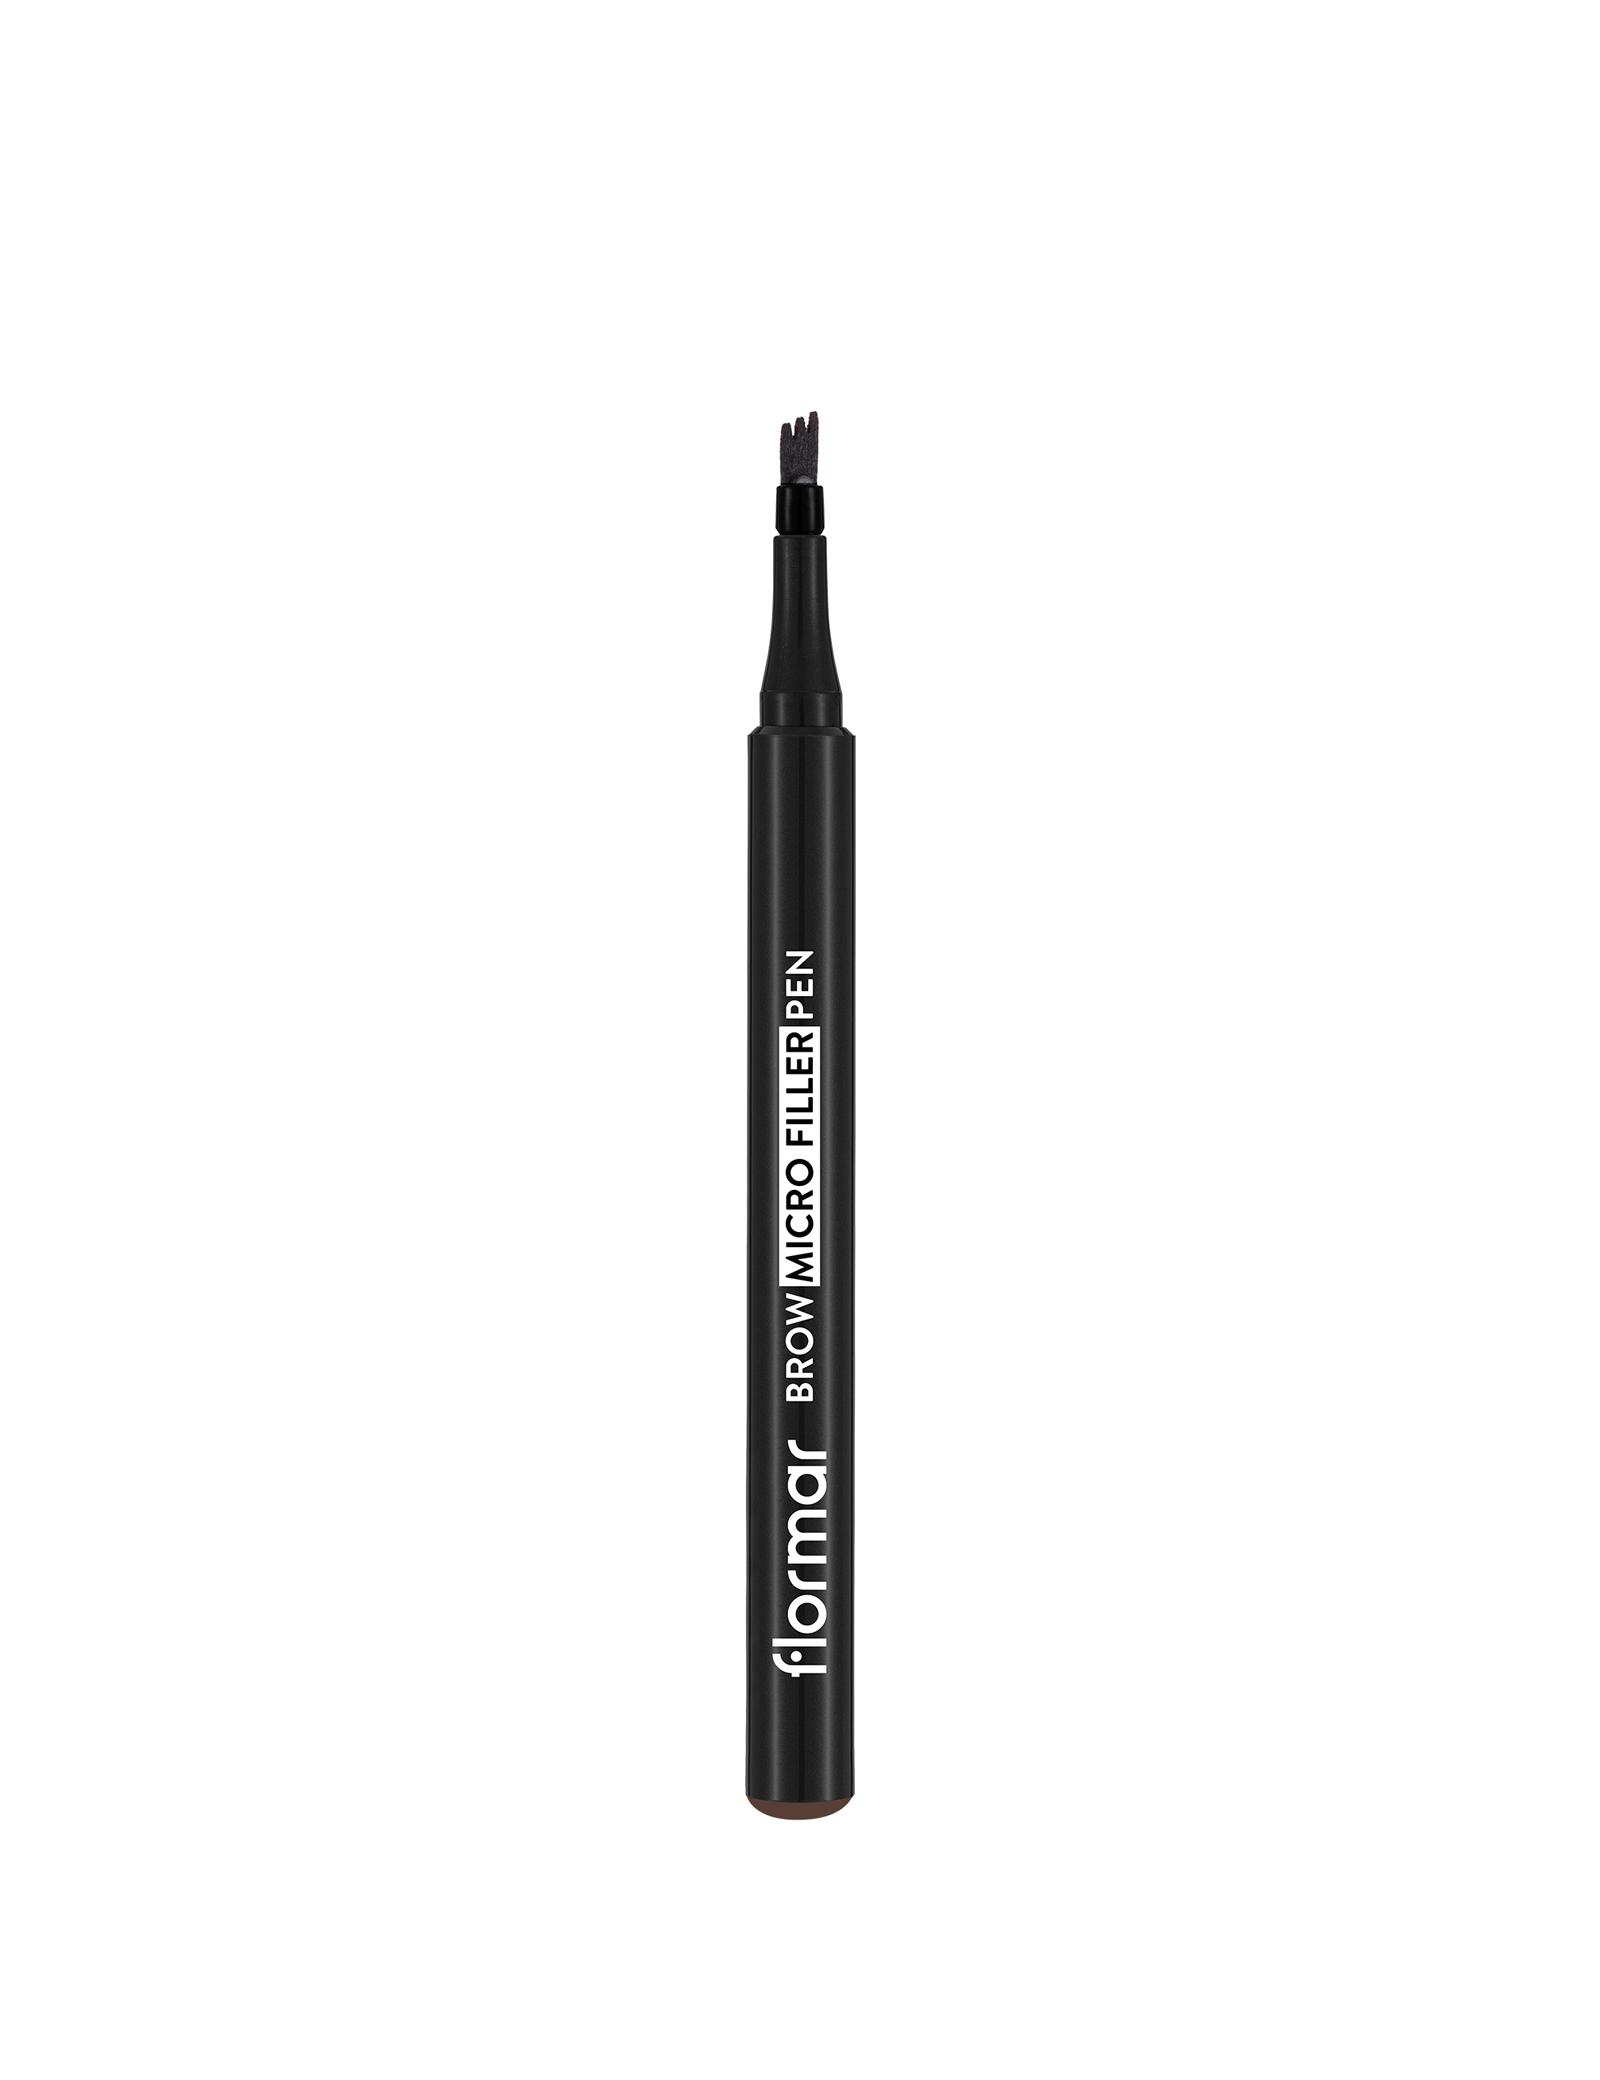 New Micro Eyebrow Filler Pencil - Dark Brown 04 from Flormar